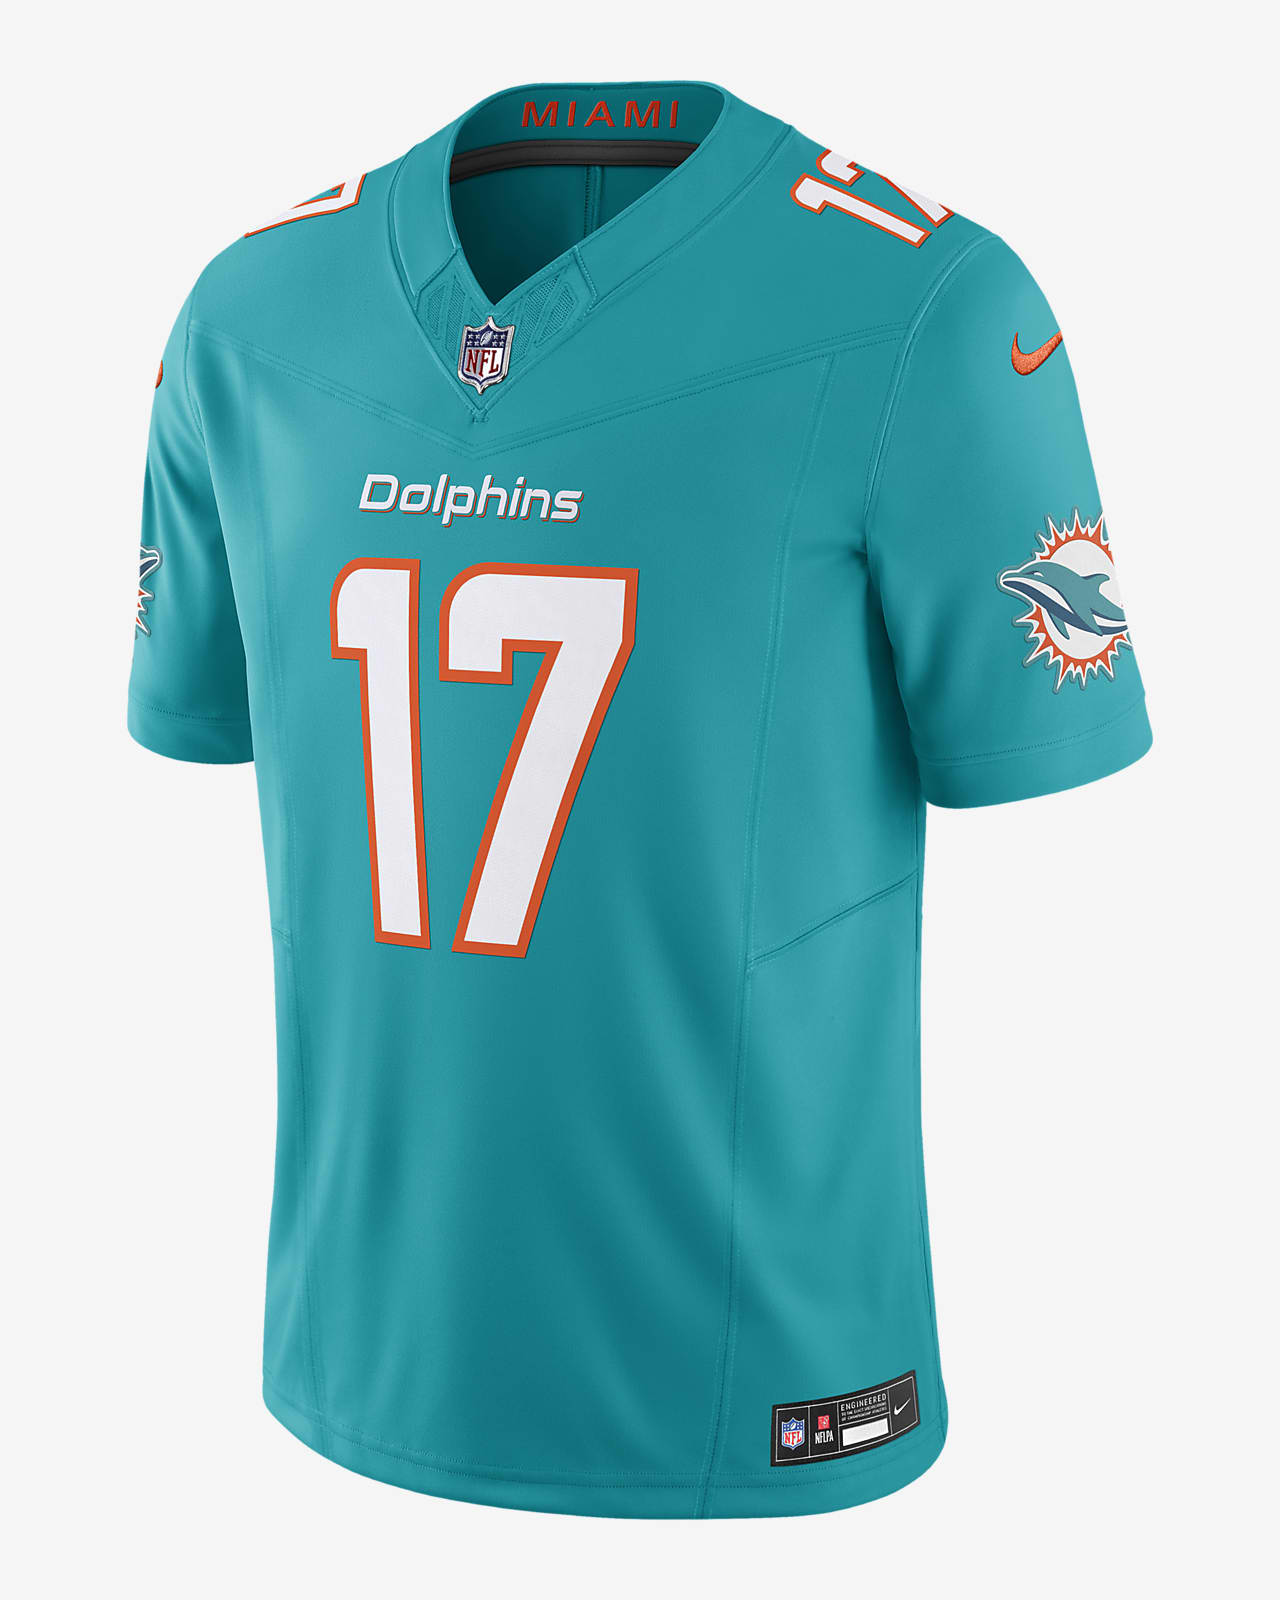 Jersey de fútbol americano Nike Dri-FIT de la NFL Limited para hombre Jaylen Waddle Miami Dolphins